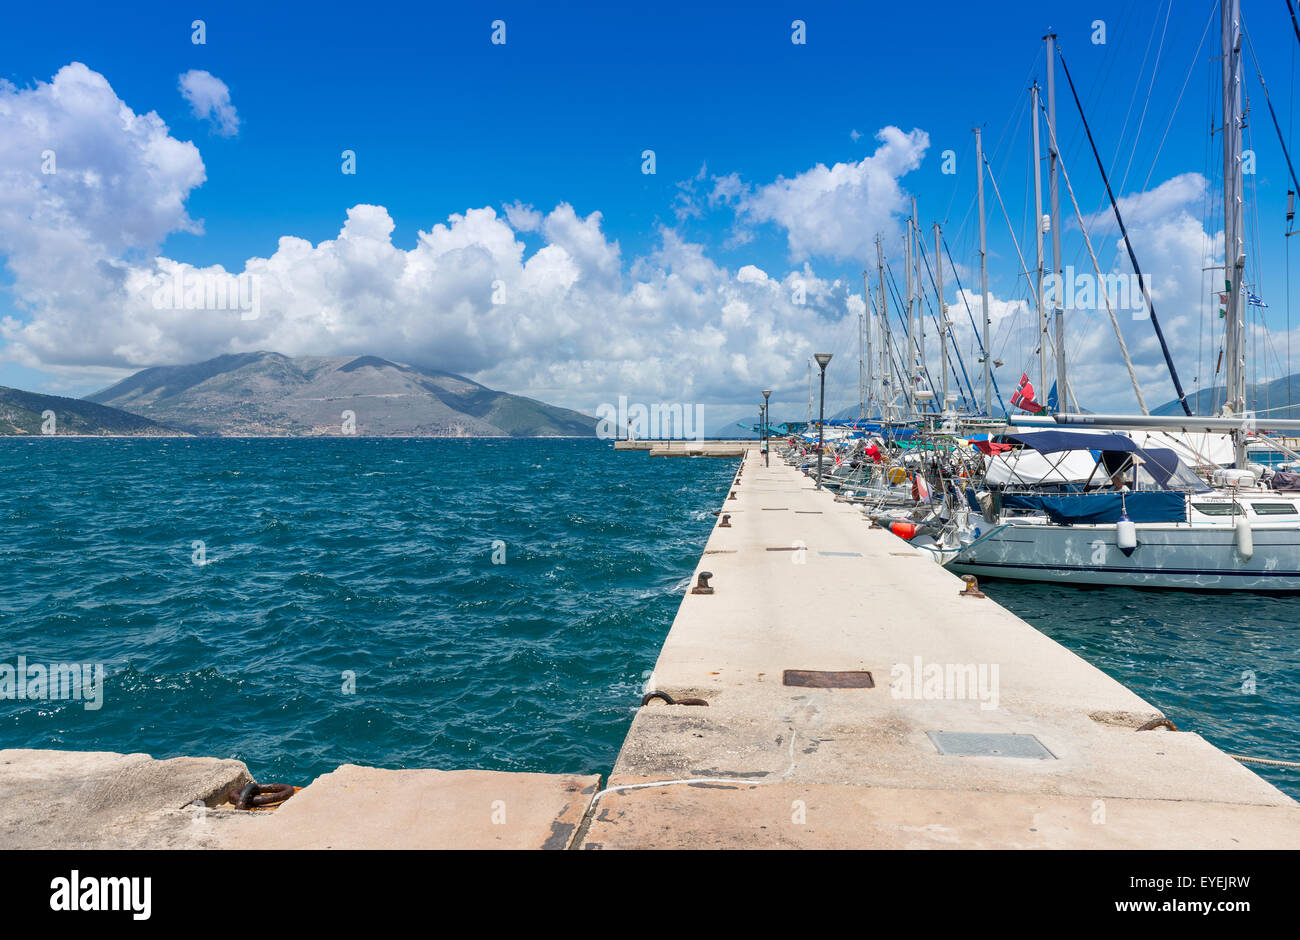 Sami Town, Kefalonia Island, Ionian Sea, Greece Stock Photo